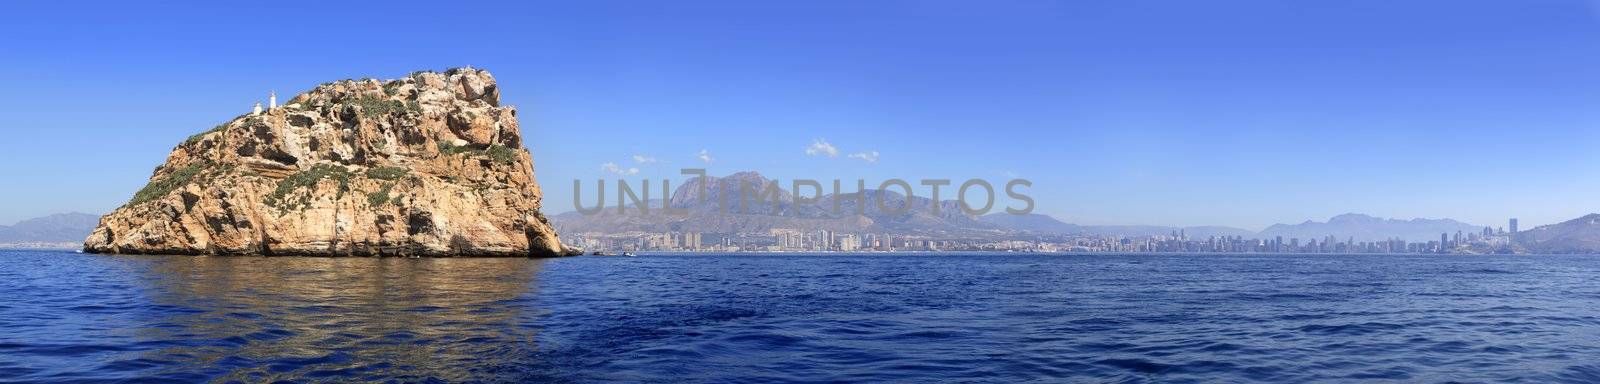 Benidorm panoramic view from island Mediterranean sea Alicante province Spain